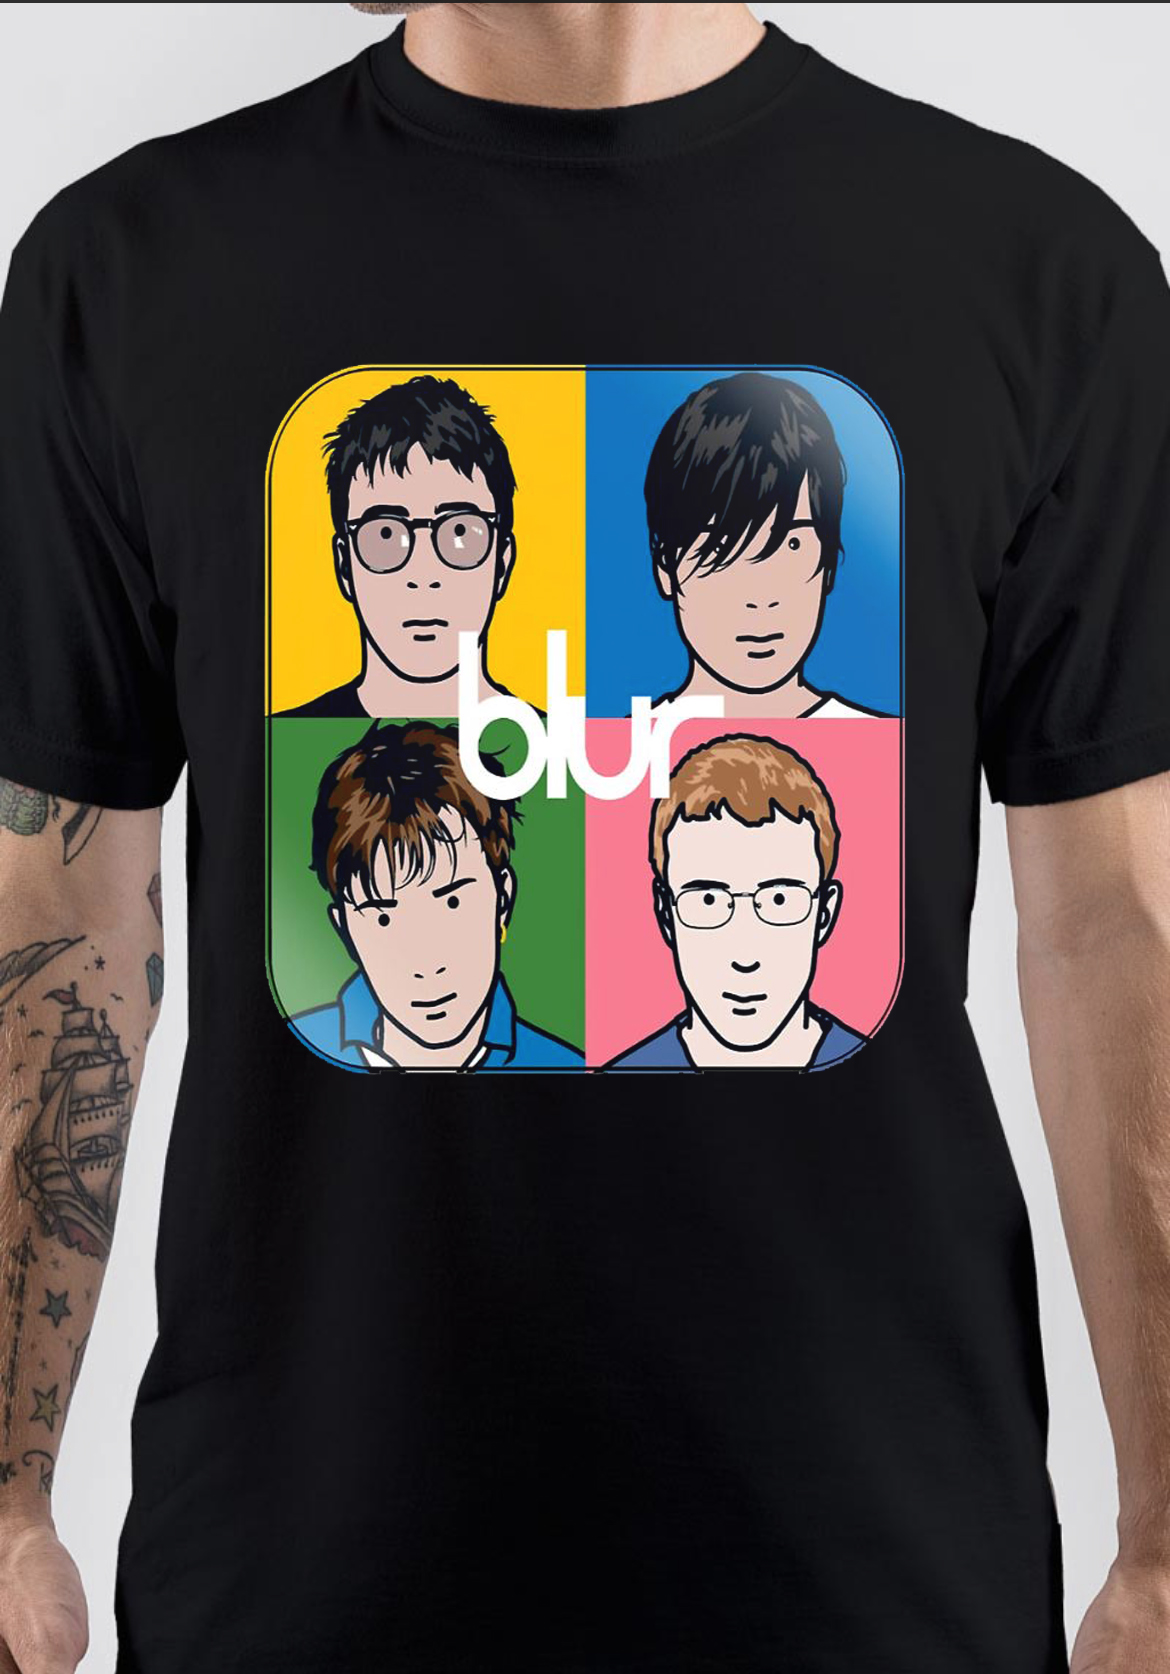 Blur T-Shirt And Merchandise